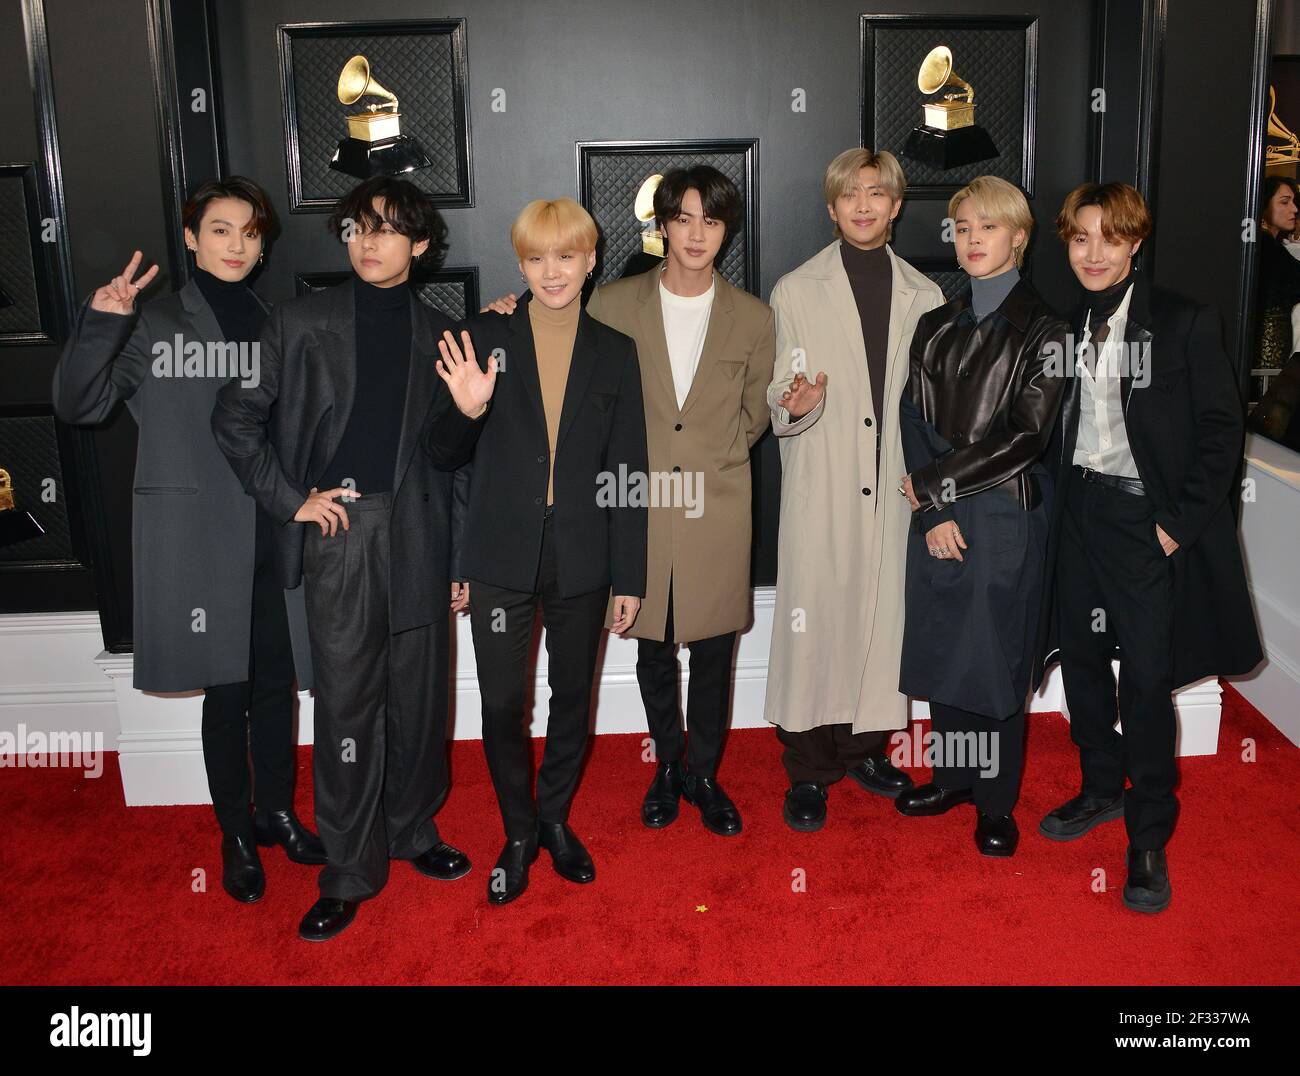 BTS Wore Dark Suits on Billboard Music Awards 2019 Red Carpet - V, Jungkook,  Jimin, Suga, Jin, RM, and J-Hope Outfits